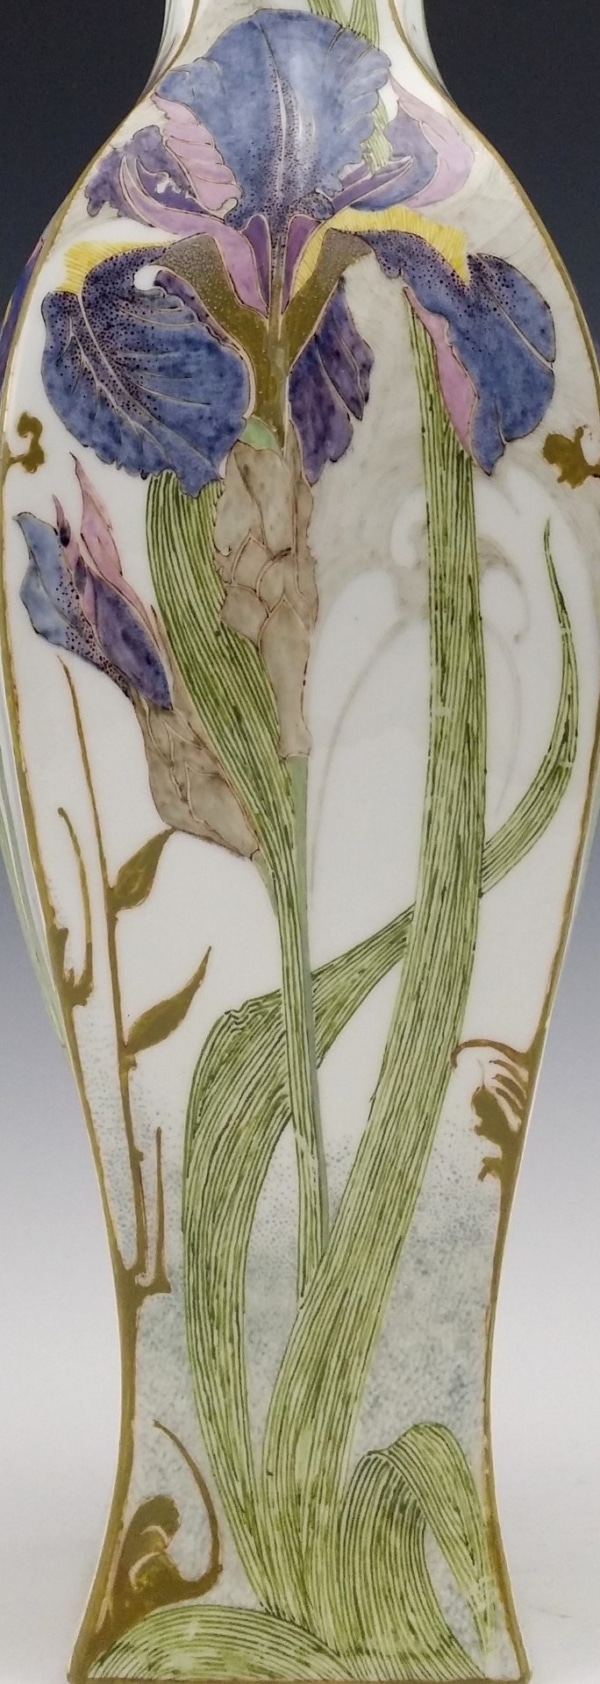 Proportio Divina | Rozenburg Den haag eggshell porcelain vase painted by Schellink 1903